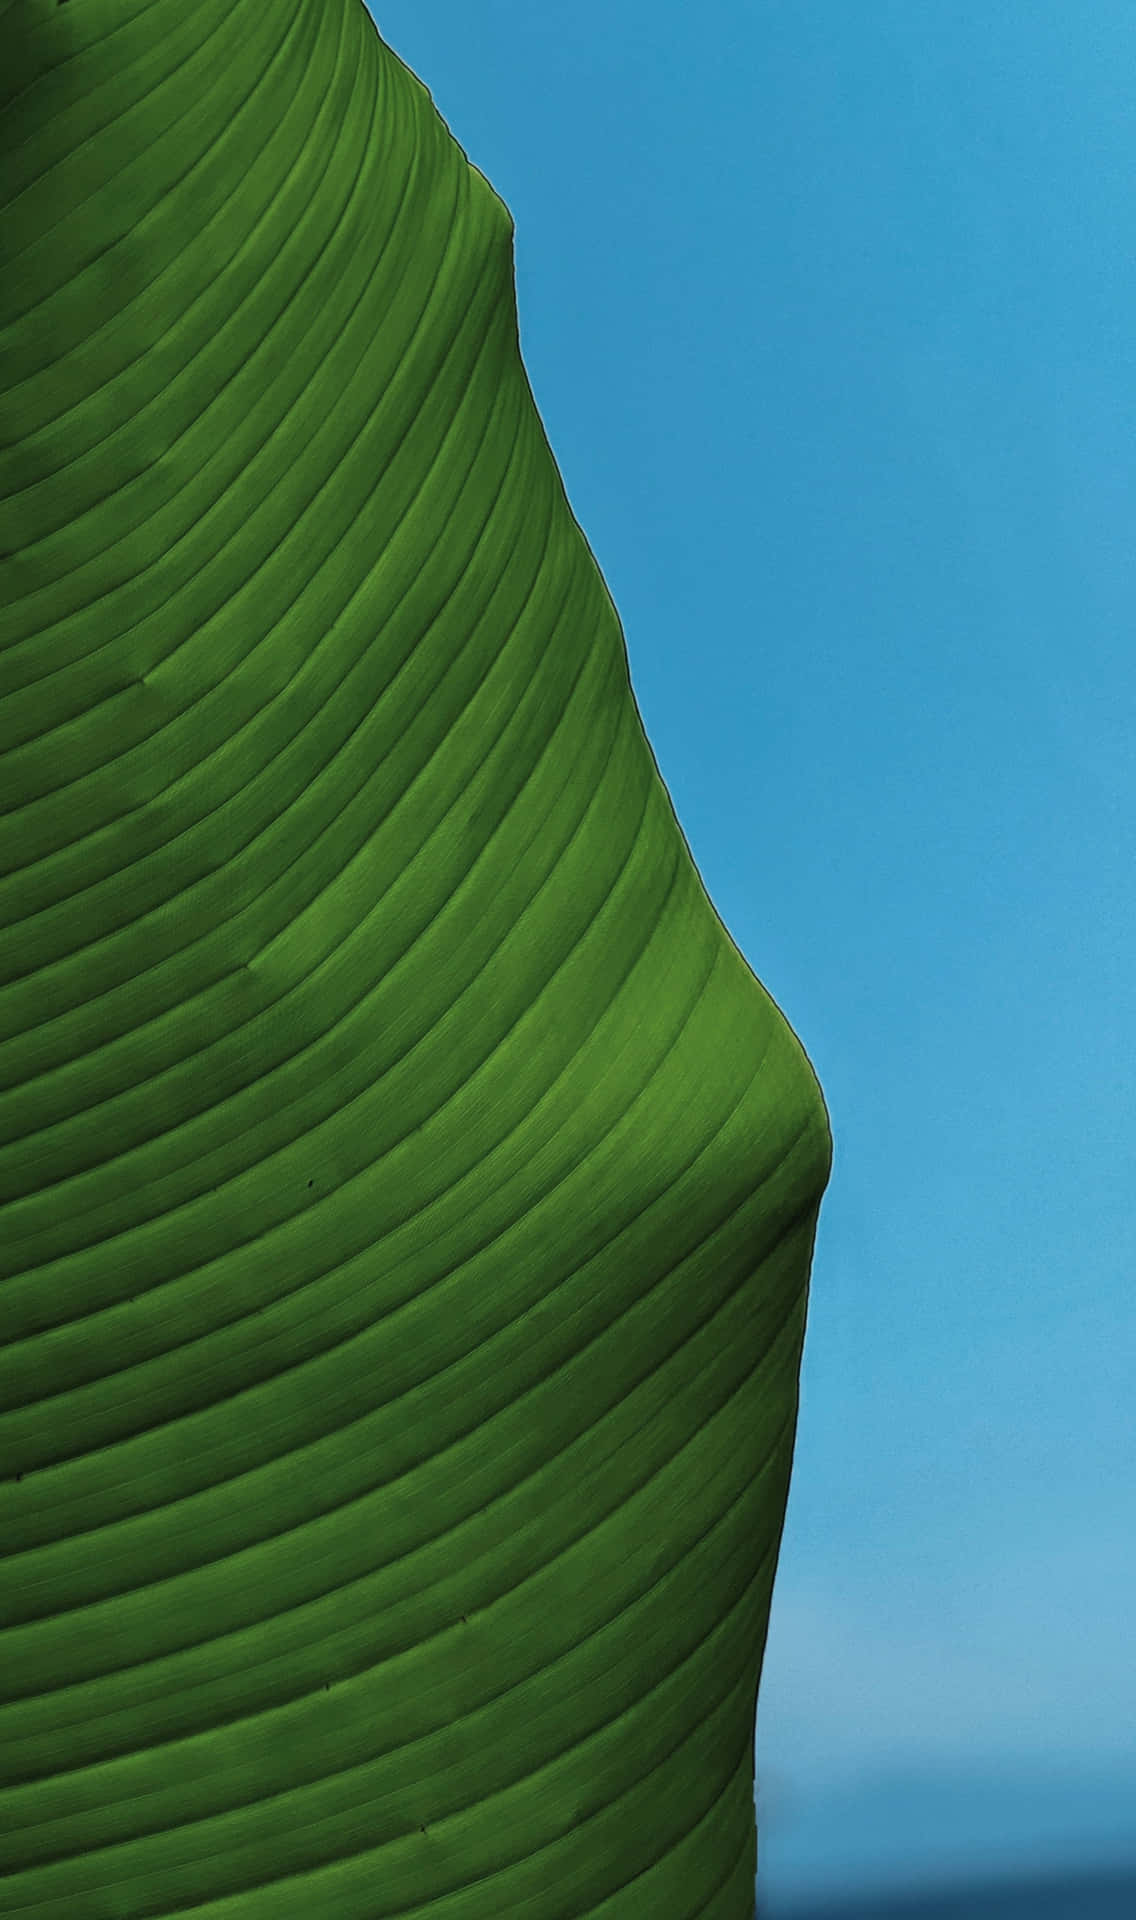 The vivid colors of a banana leaf make an eye-catching backdrop.